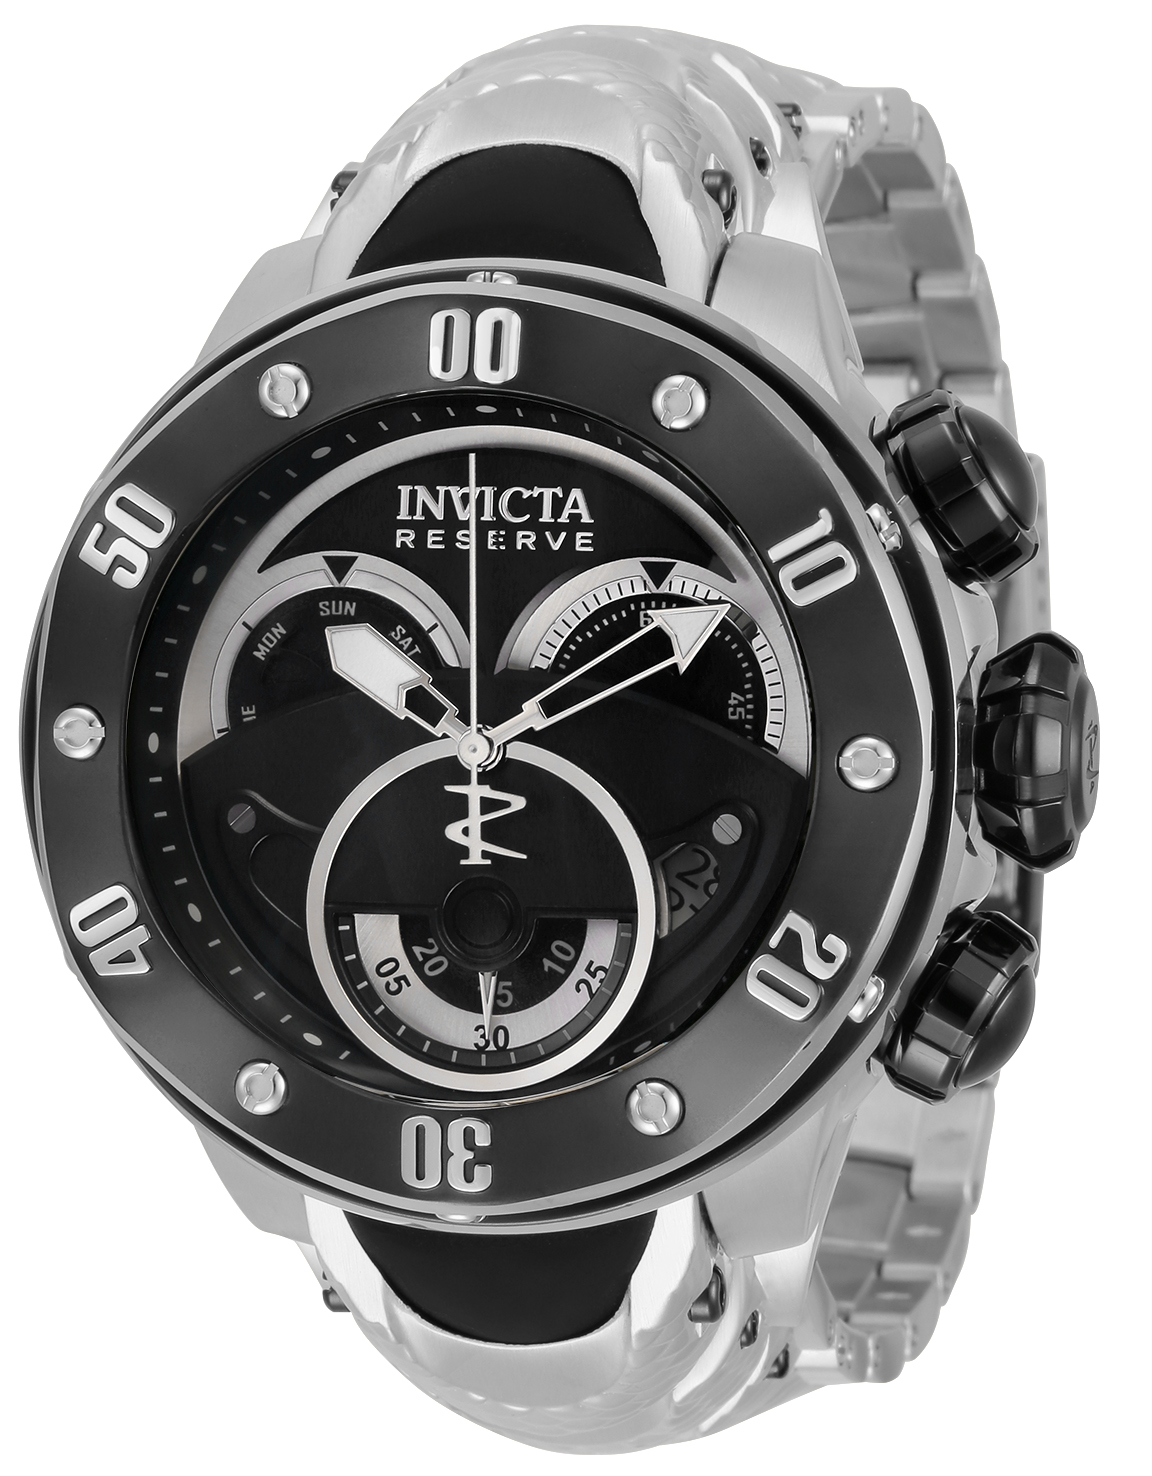 Invicta Reserve Men's Watch - 54mm, Steel, Black (33370)